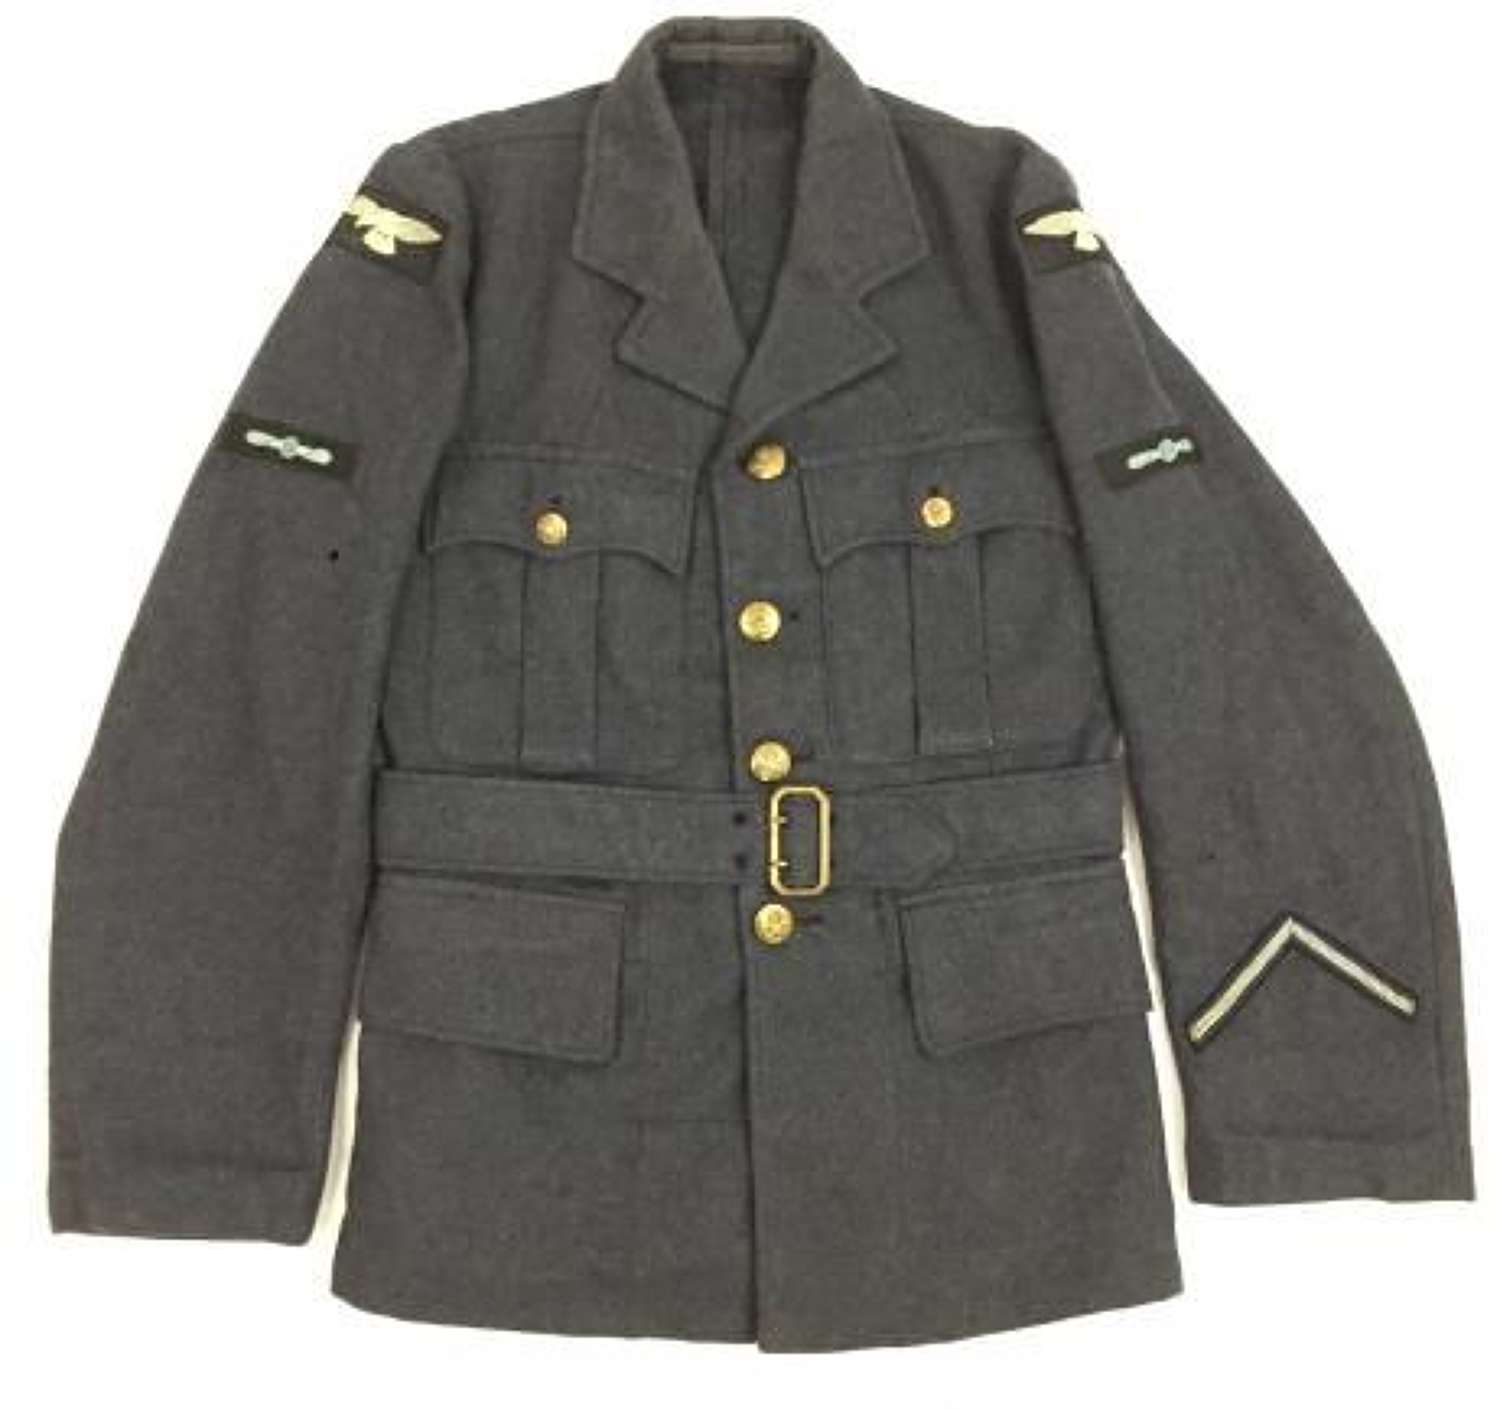 Original 1945 Dated RAF Ordinary Airman's Tunic - Size 8